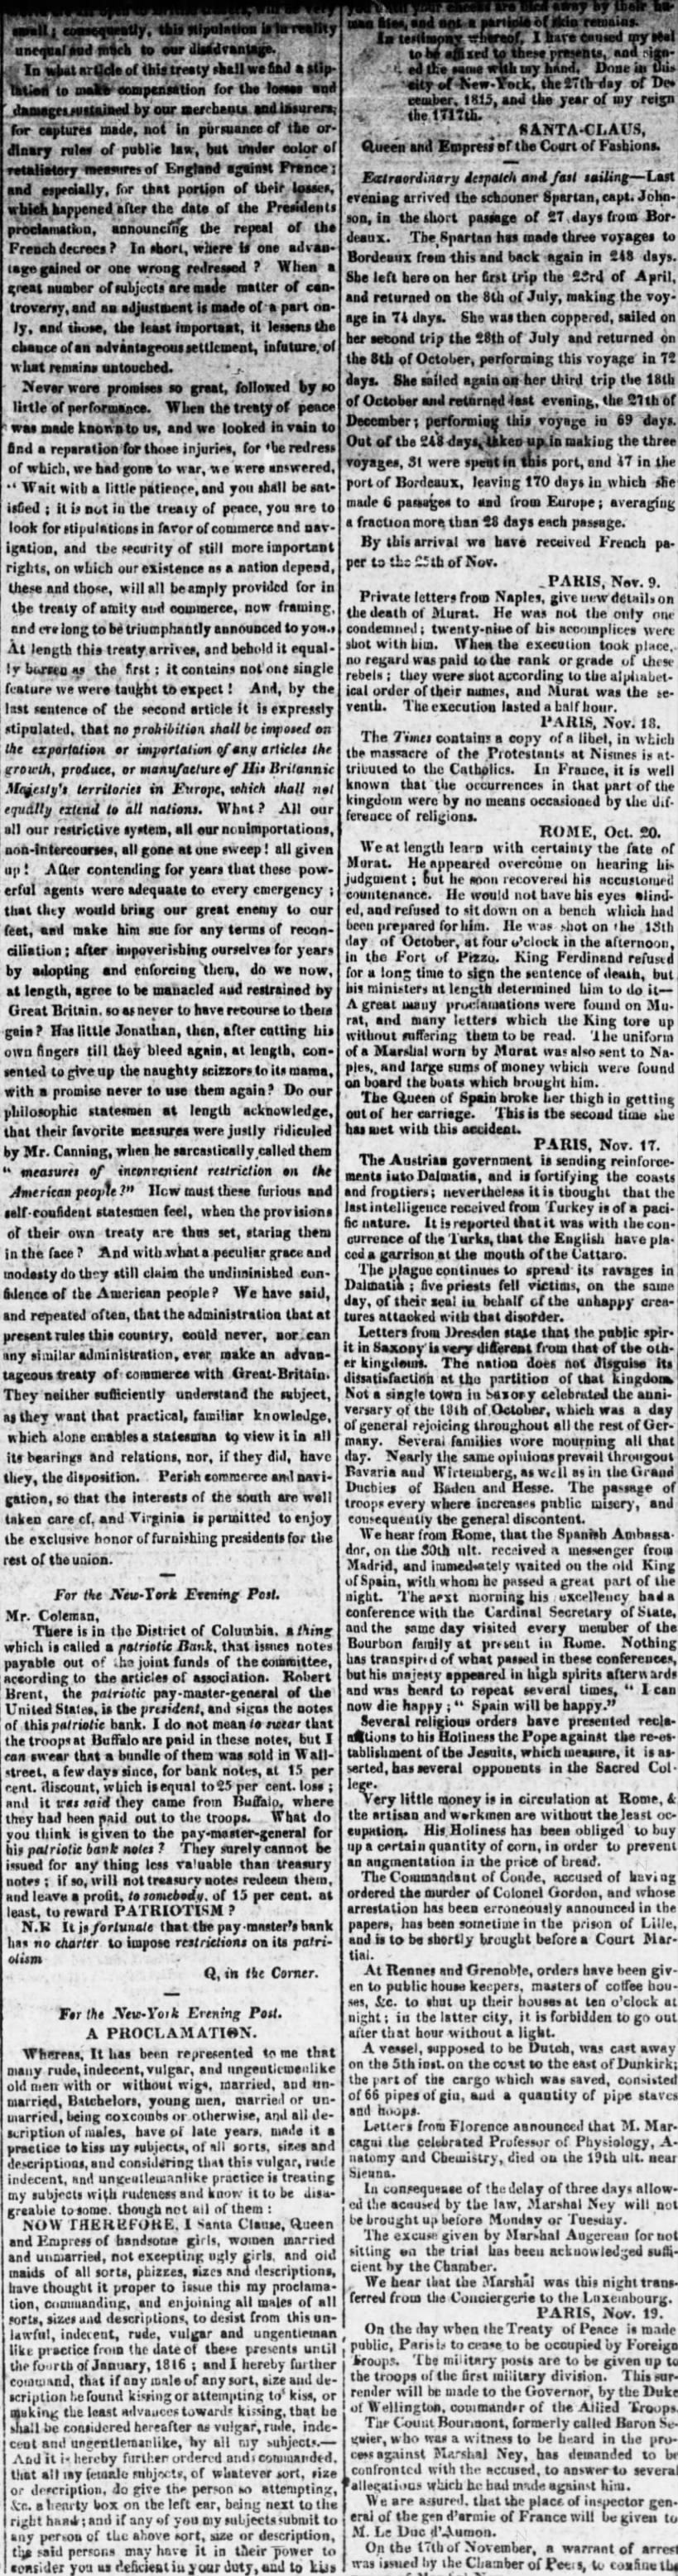 Santa Clause Proclamation, (New York) Evening Post (Dec. 28, 1815)